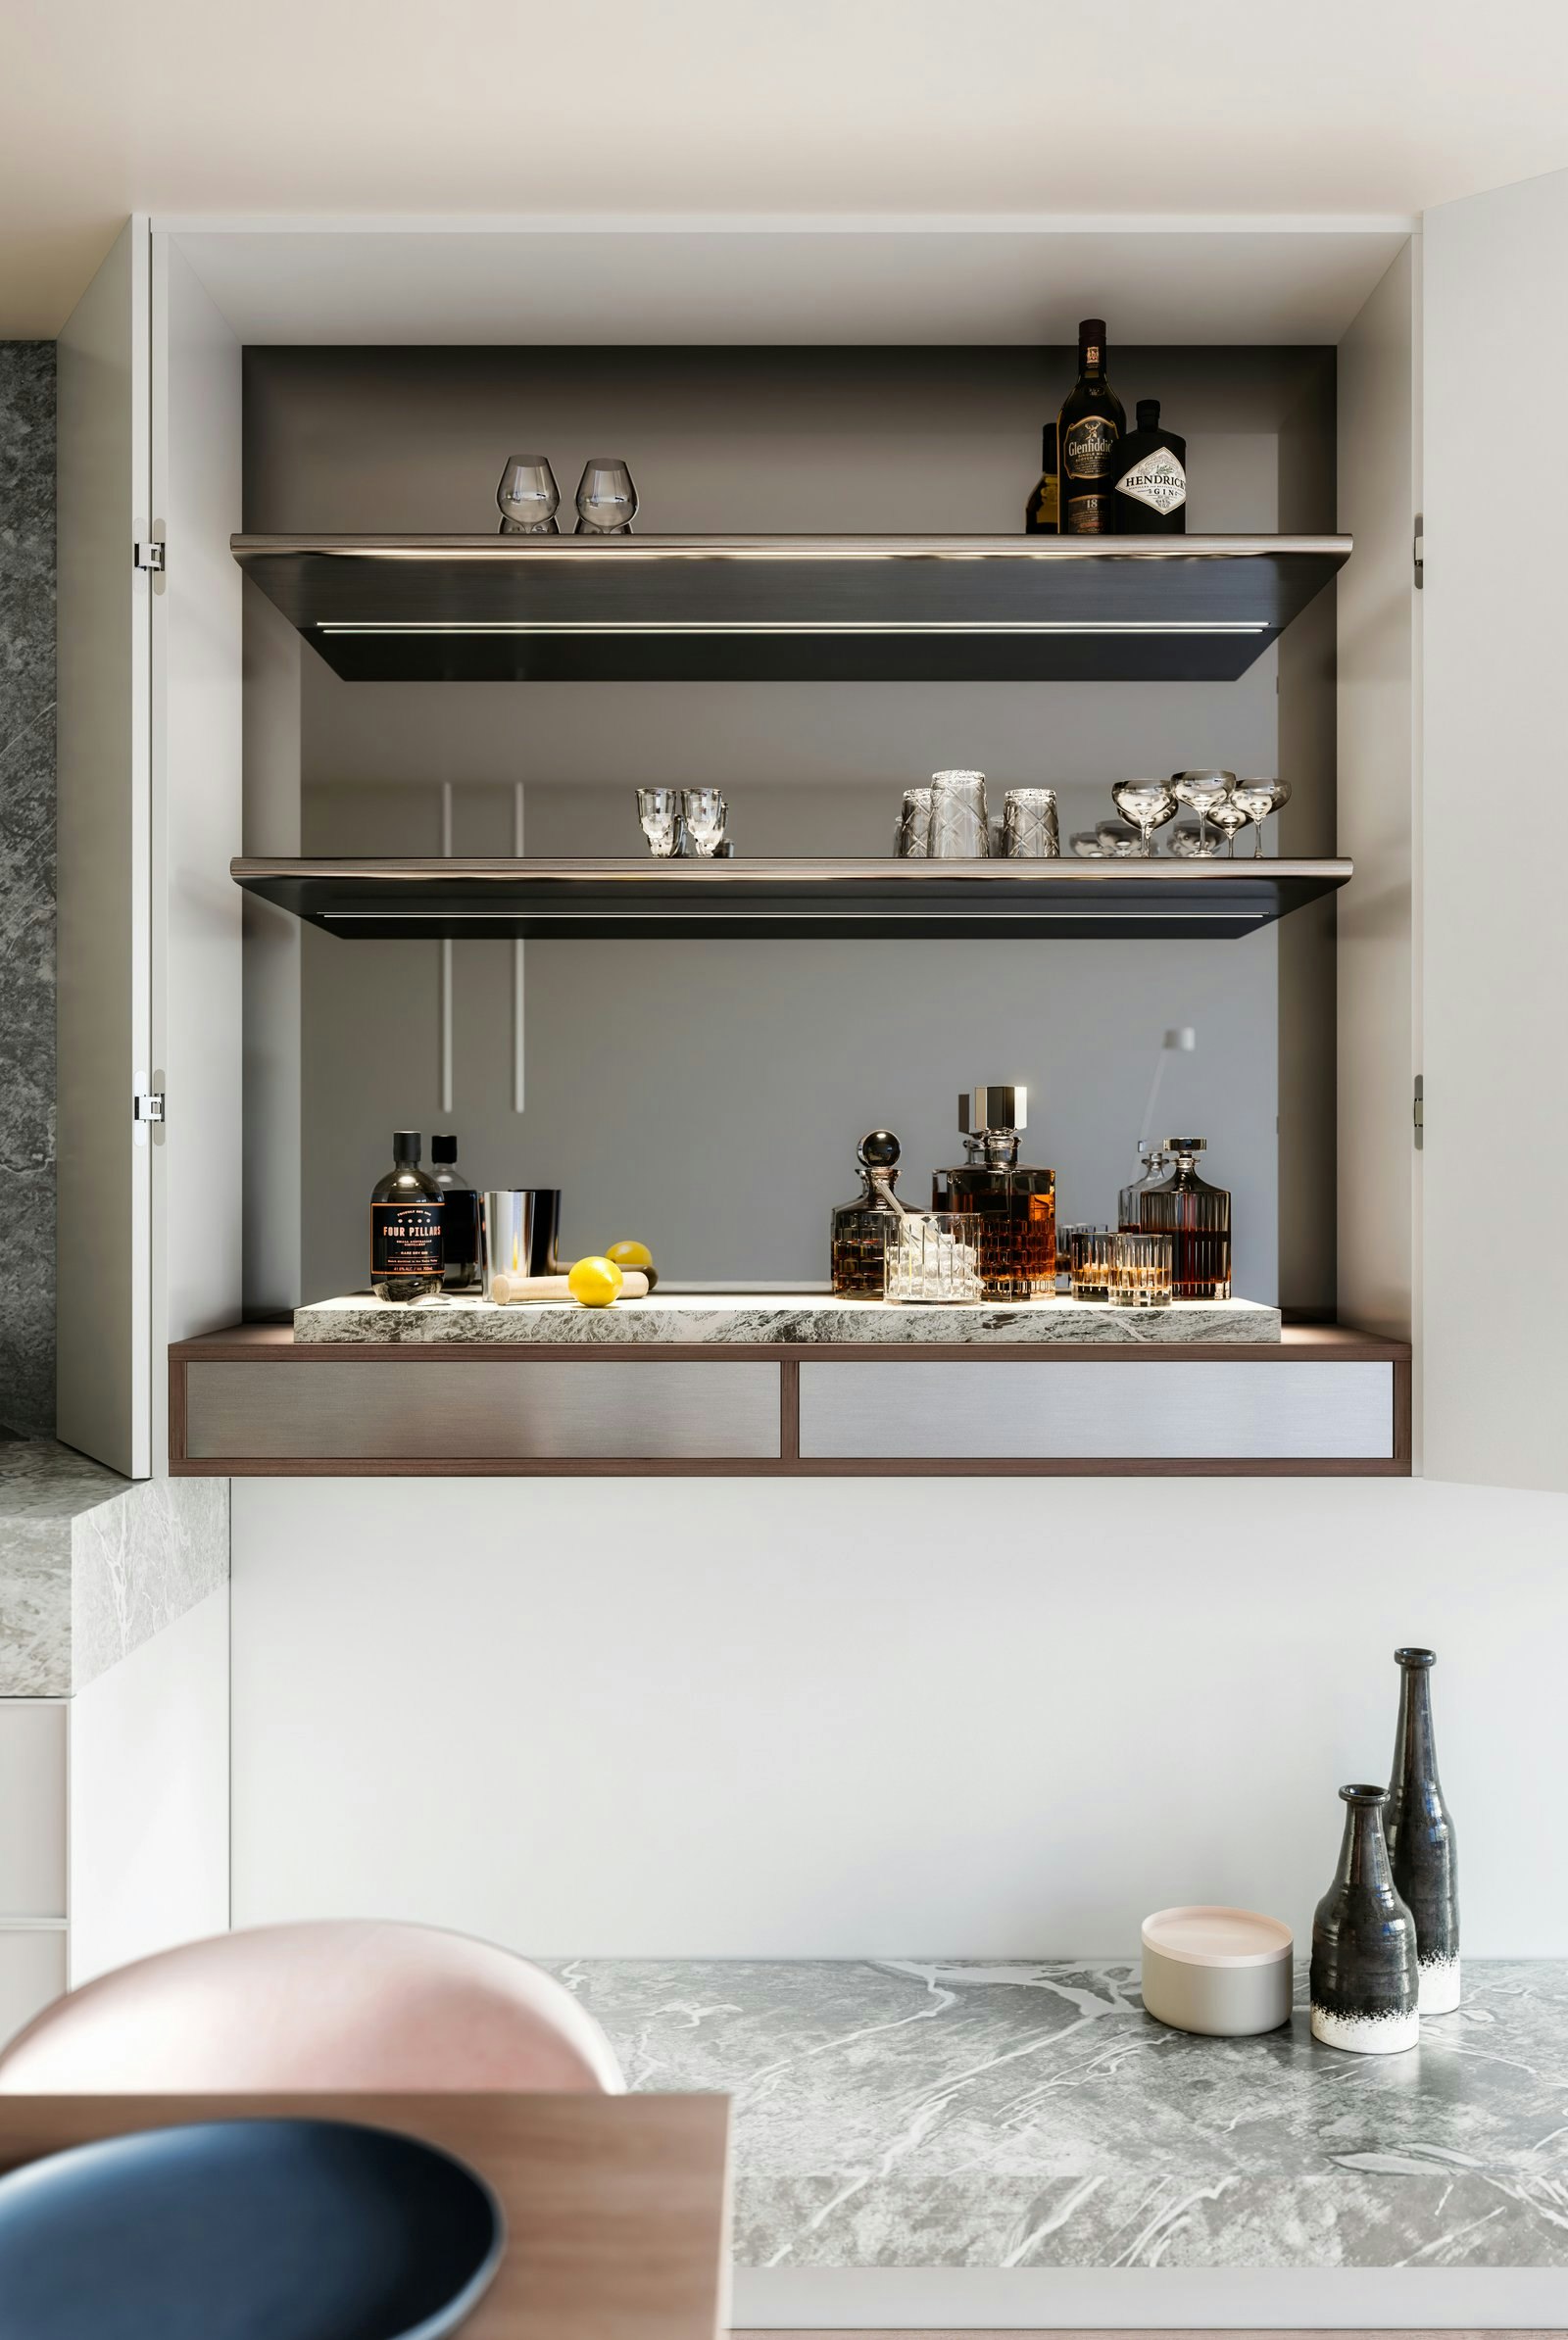 Image of shelf